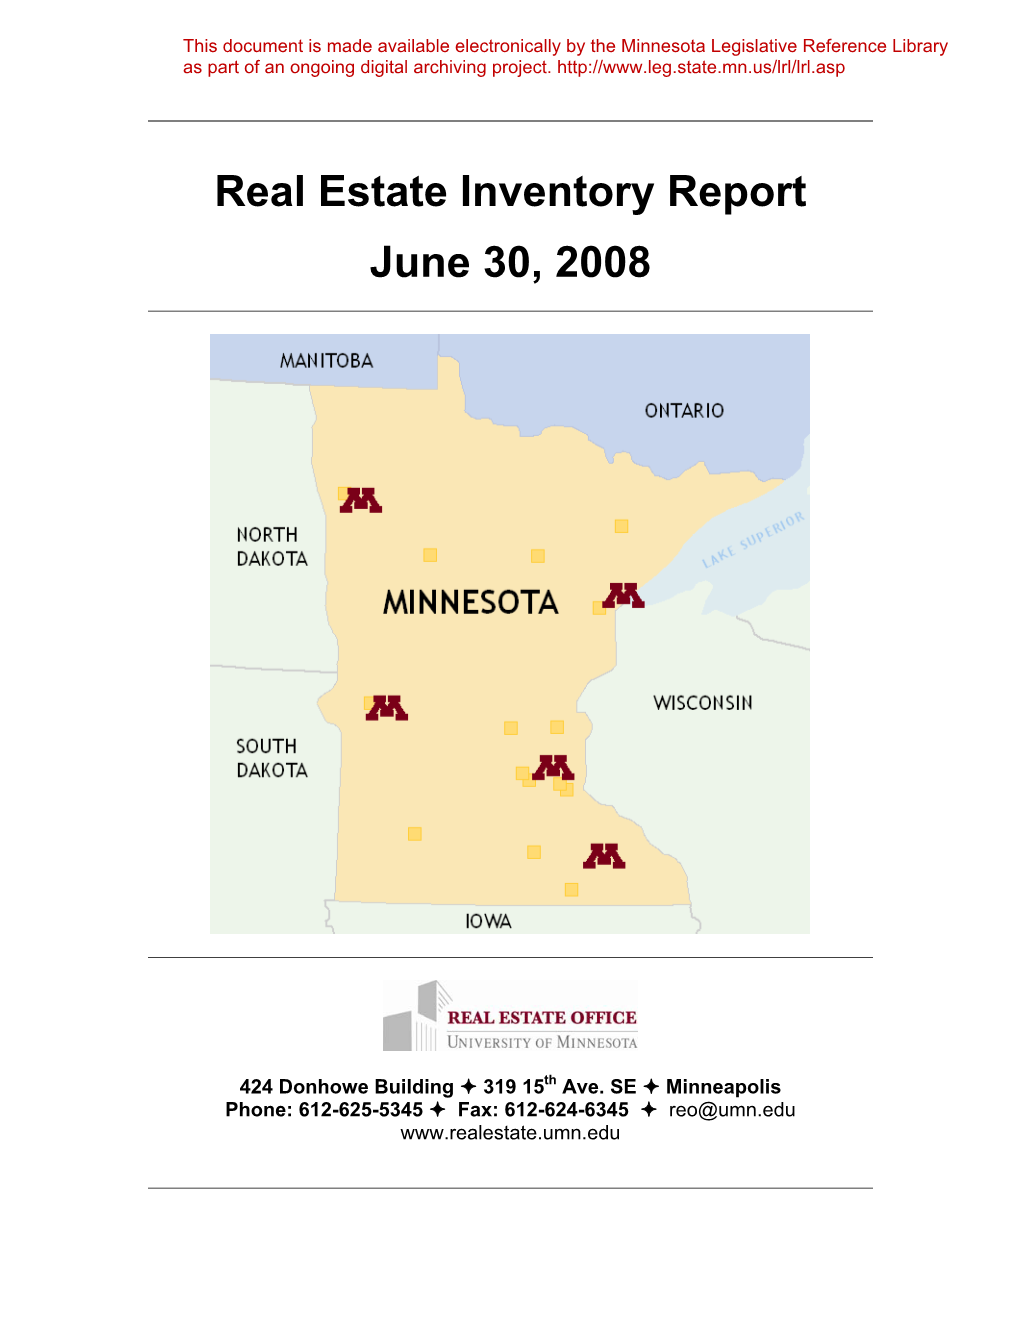 Real Estate Inventory Report June 30, 2008